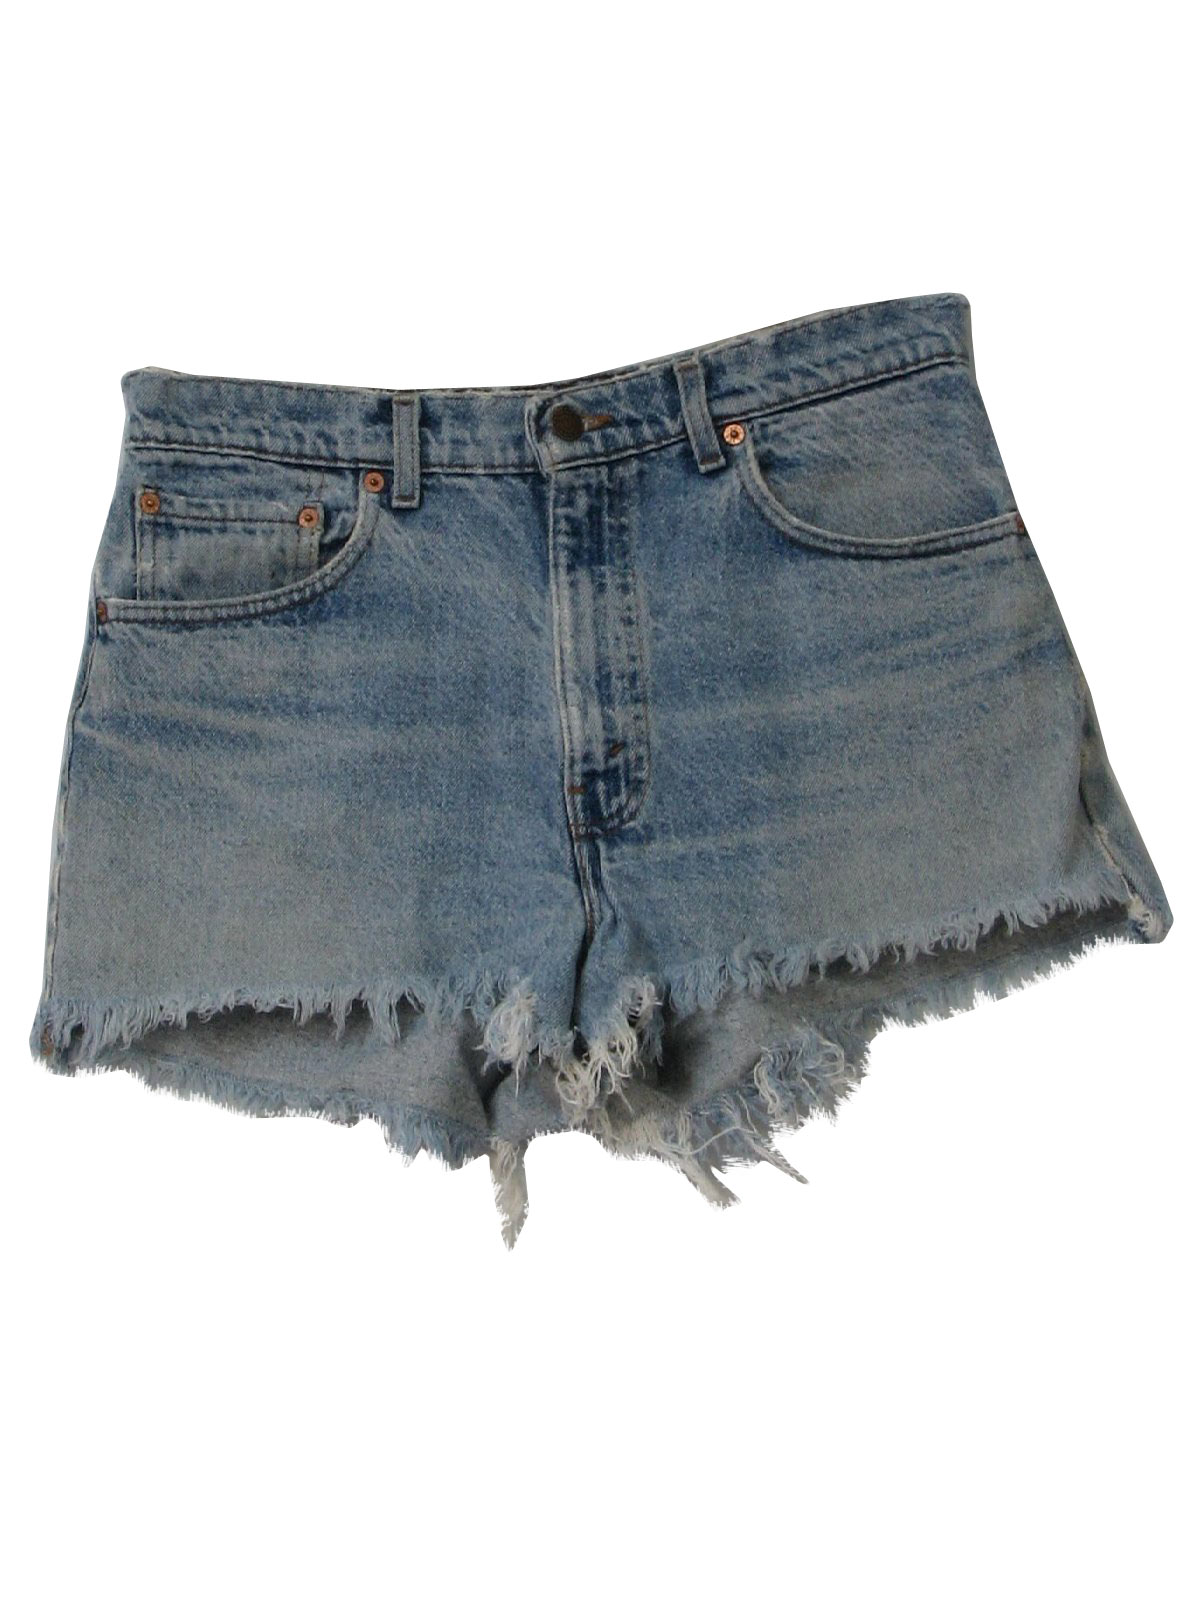 Cut Off Blue Jean Shorts - Trendy Clothes